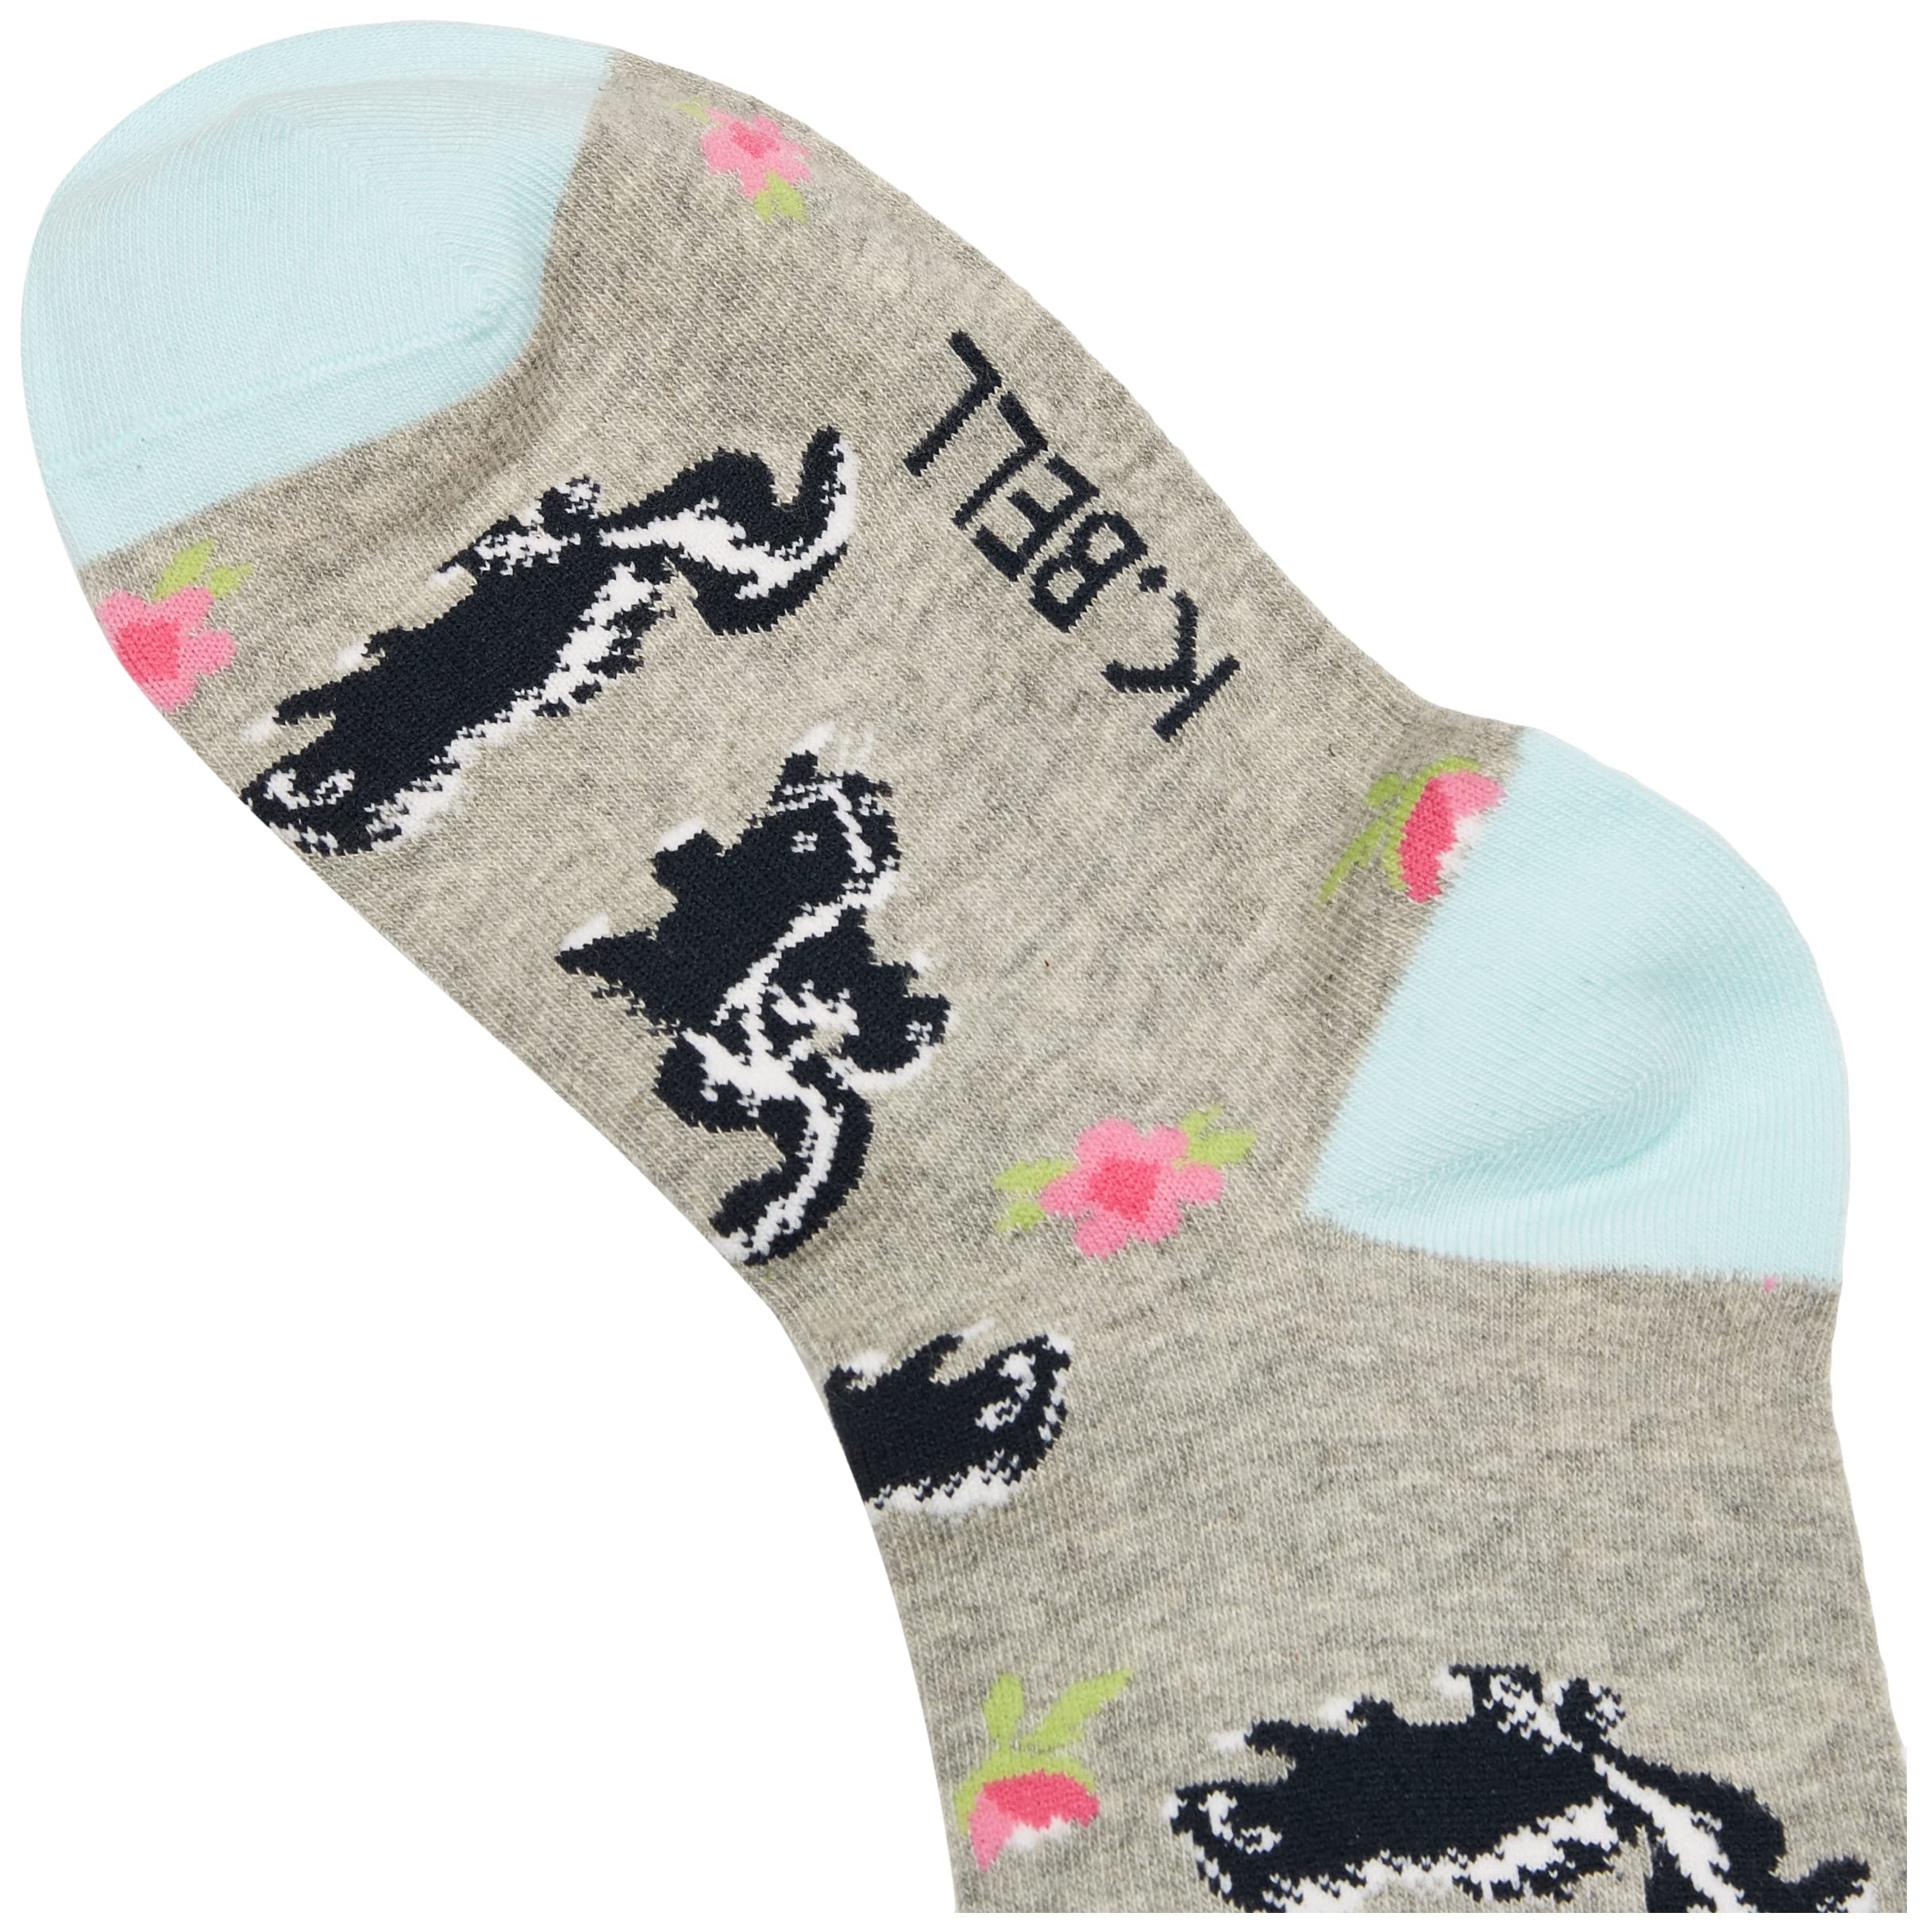 K. Bell Socks Women's Fun Animal Crew Socks-1 Pairs-Cool & Cute Wordplay Novelty Gifts